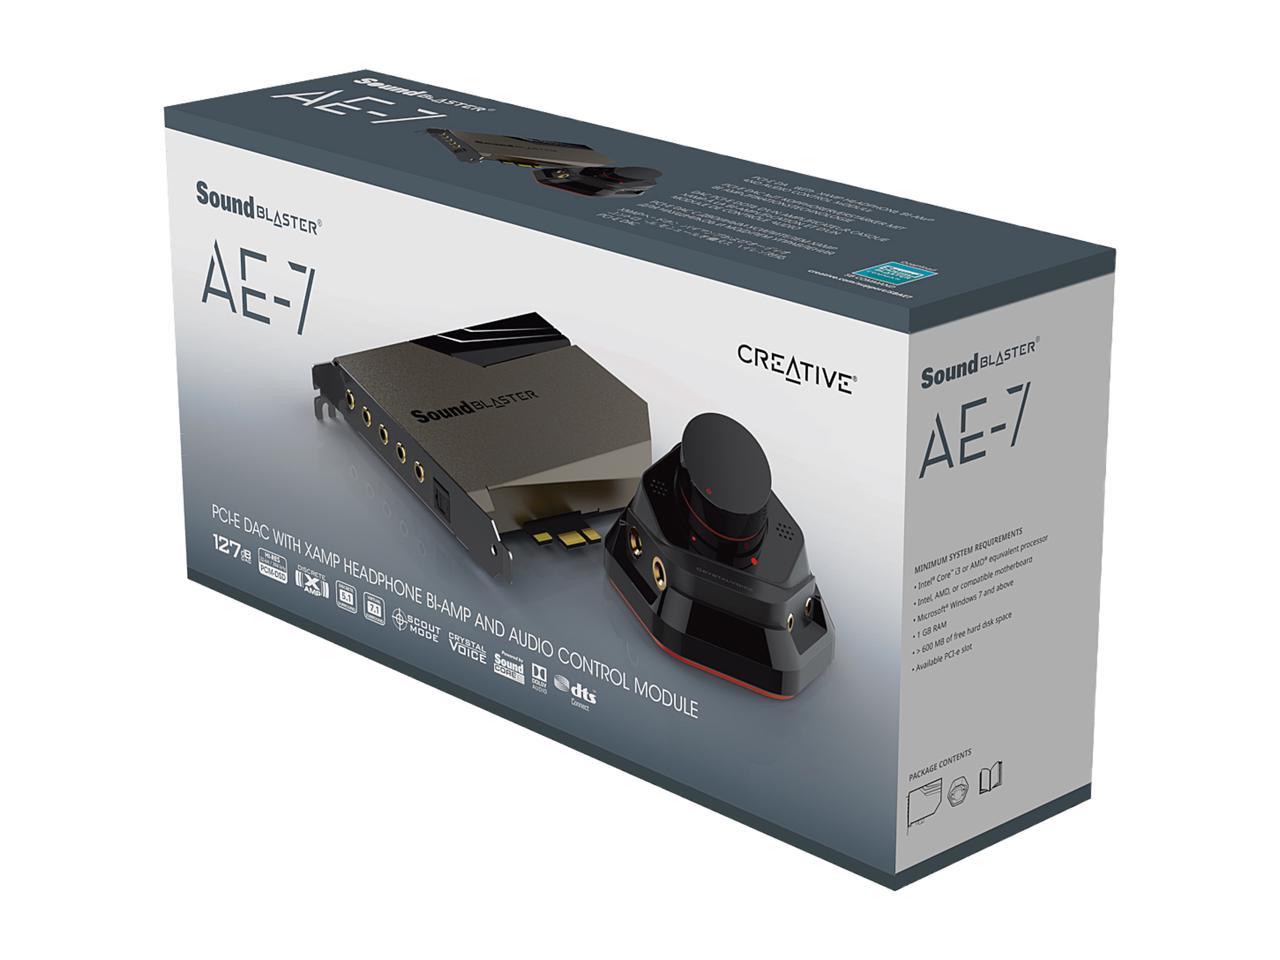 Creative Sound Blaster AE-7 Sound Card (Metallic Gray)